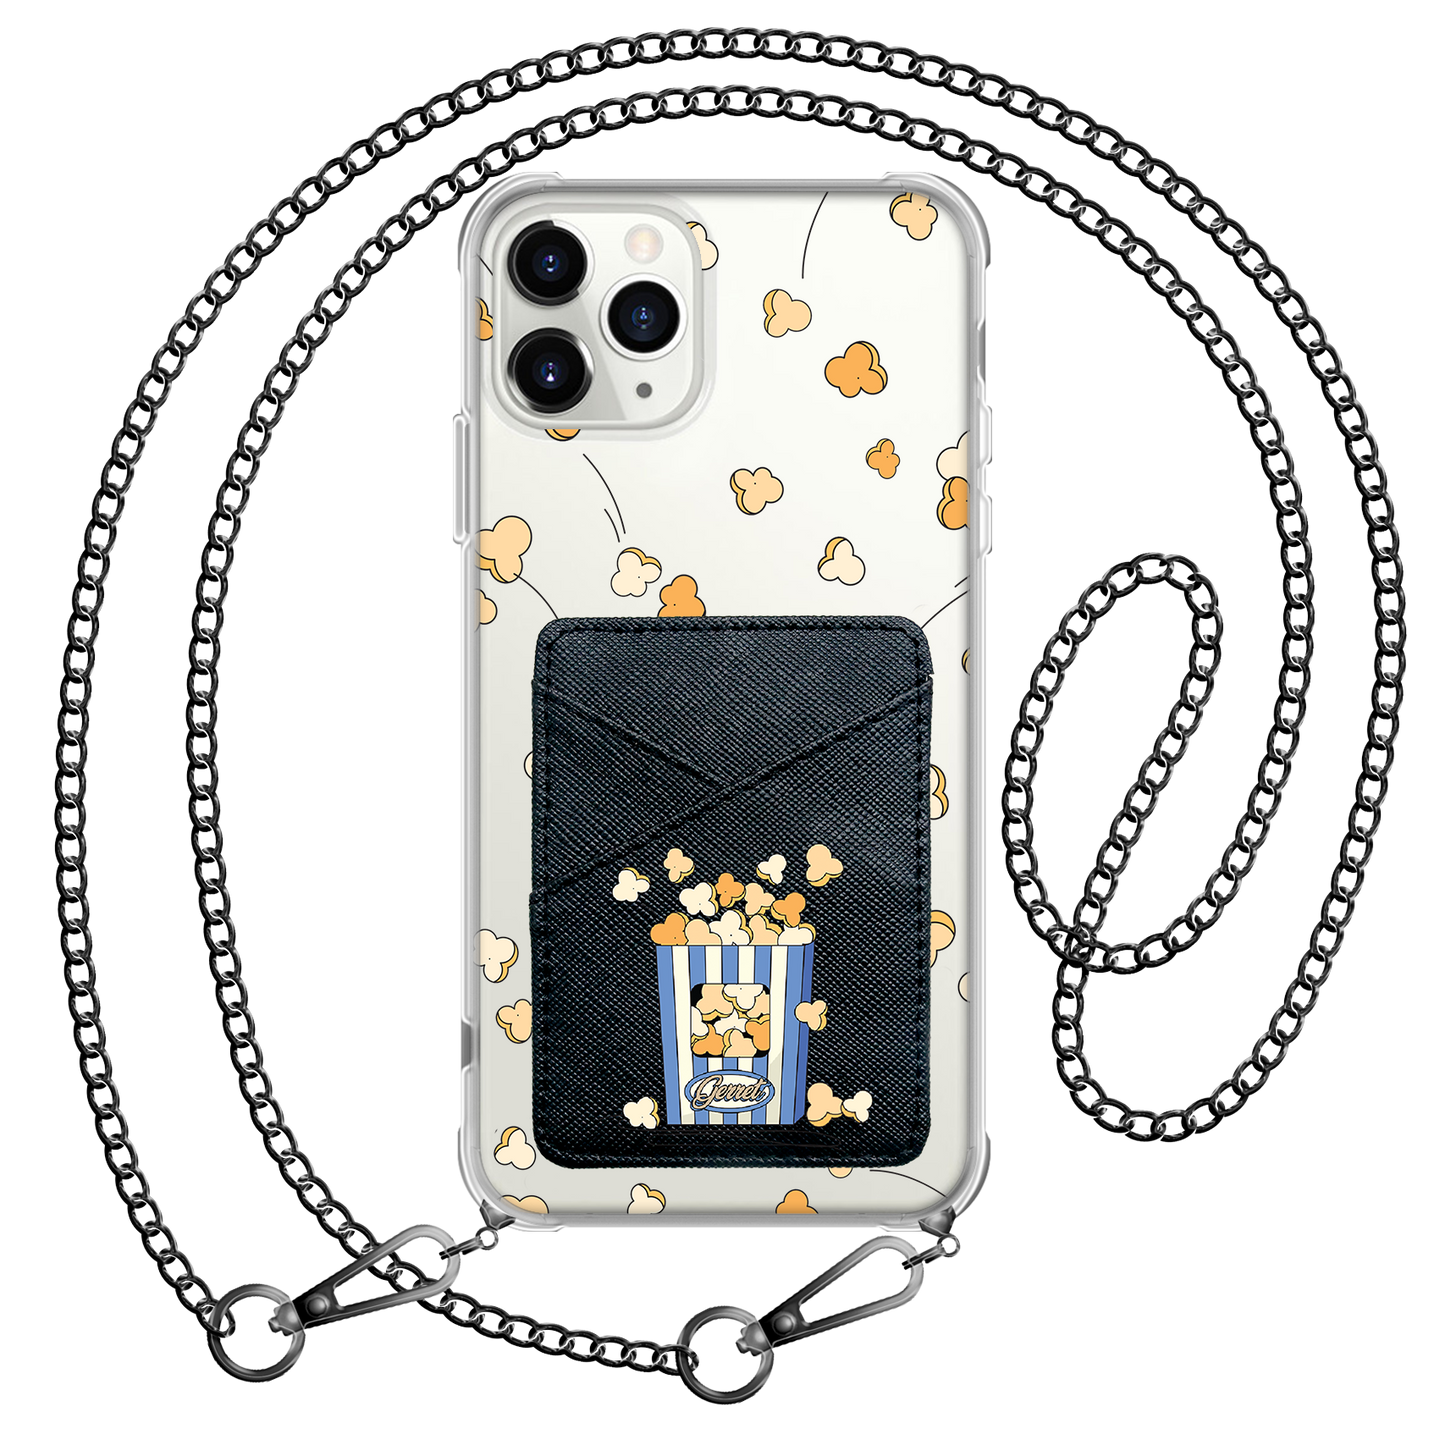 iPhone Phone Wallet Case - Popcorn